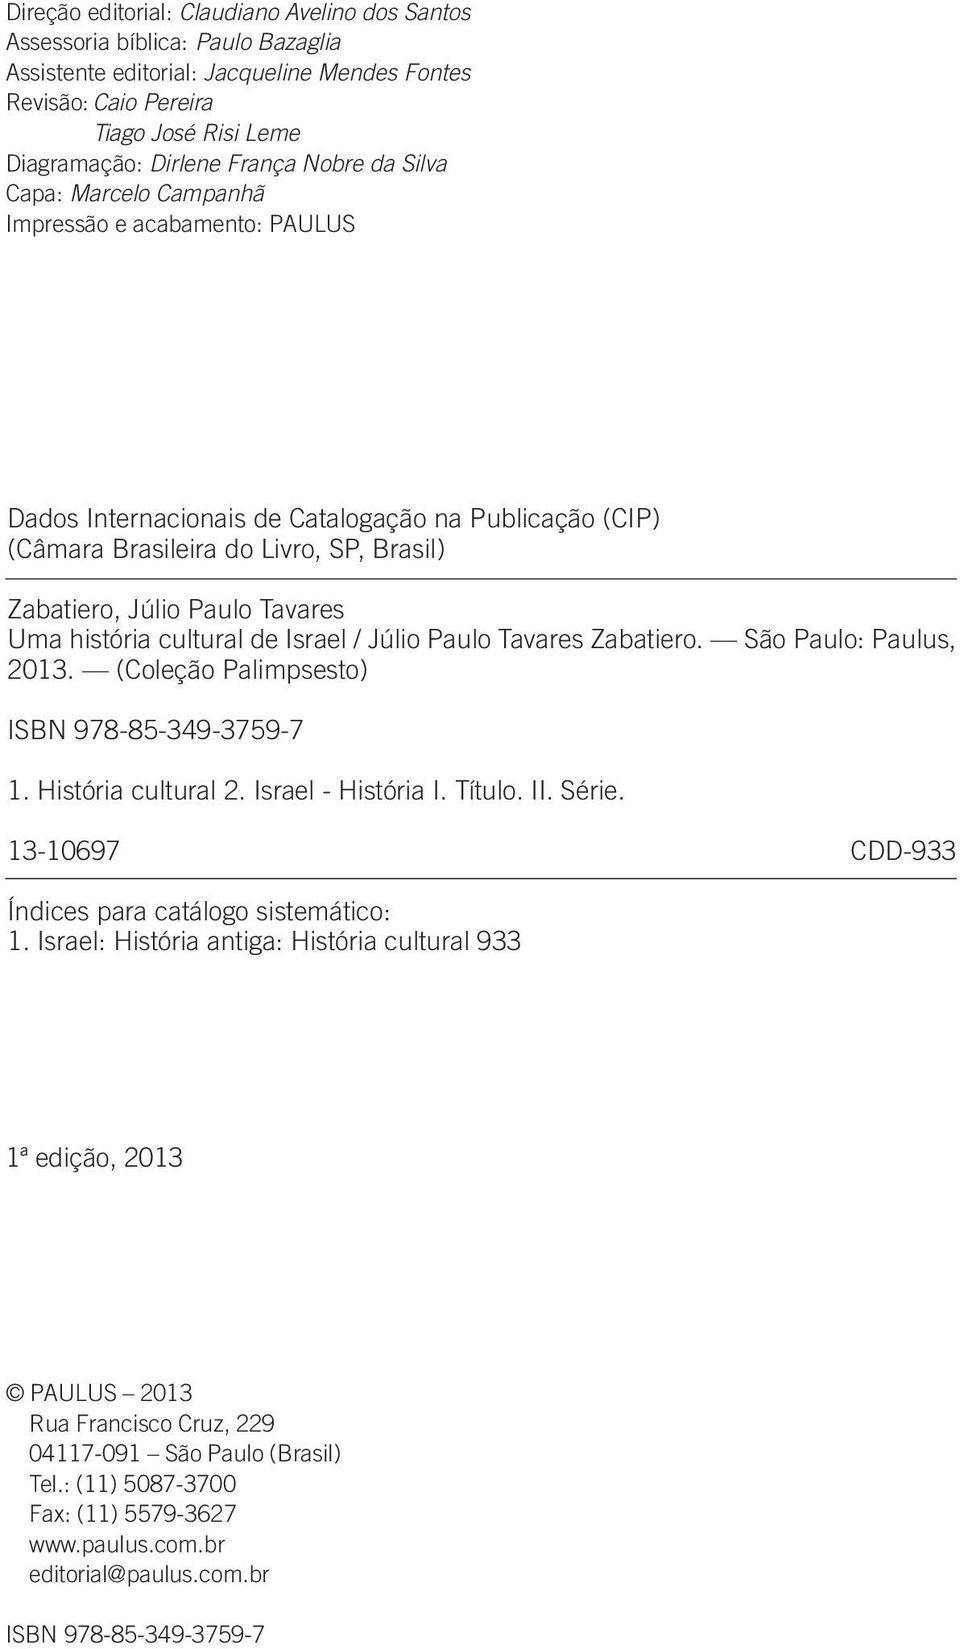 Tavares Uma história cultural de Israel / Júlio Paulo Tavares Zabatiero. São Paulo: Paulus, 2013. (Coleção Palimpsesto) ISBN 978-85-349-3759-7 1. História cultural 2. Israel - História I. Título. II.